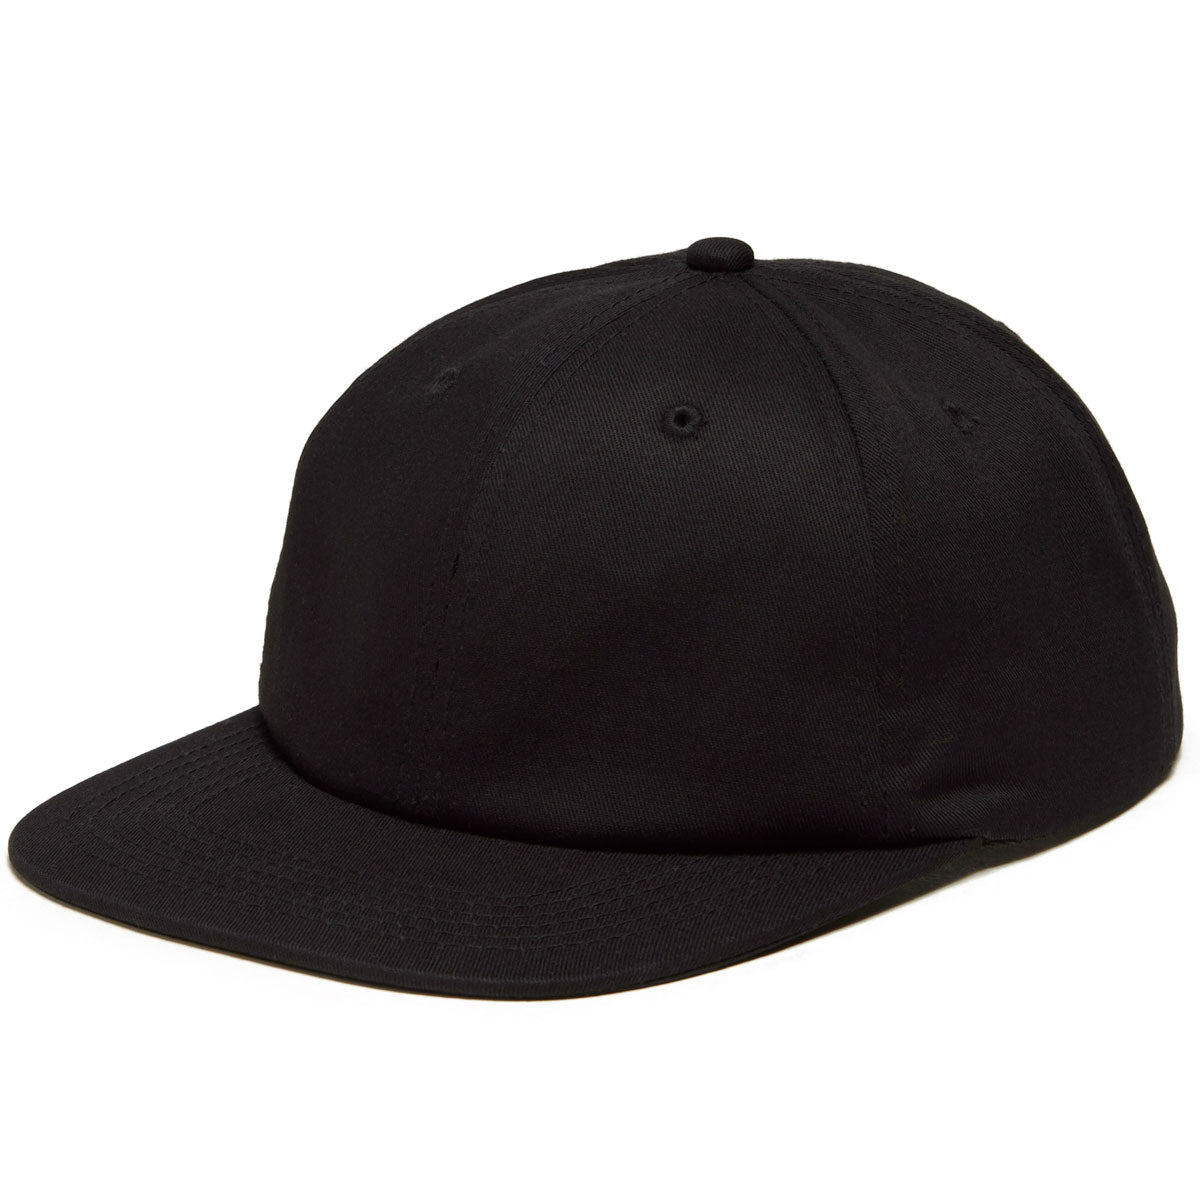 CCS 6 Panel Snapback Hat - Black